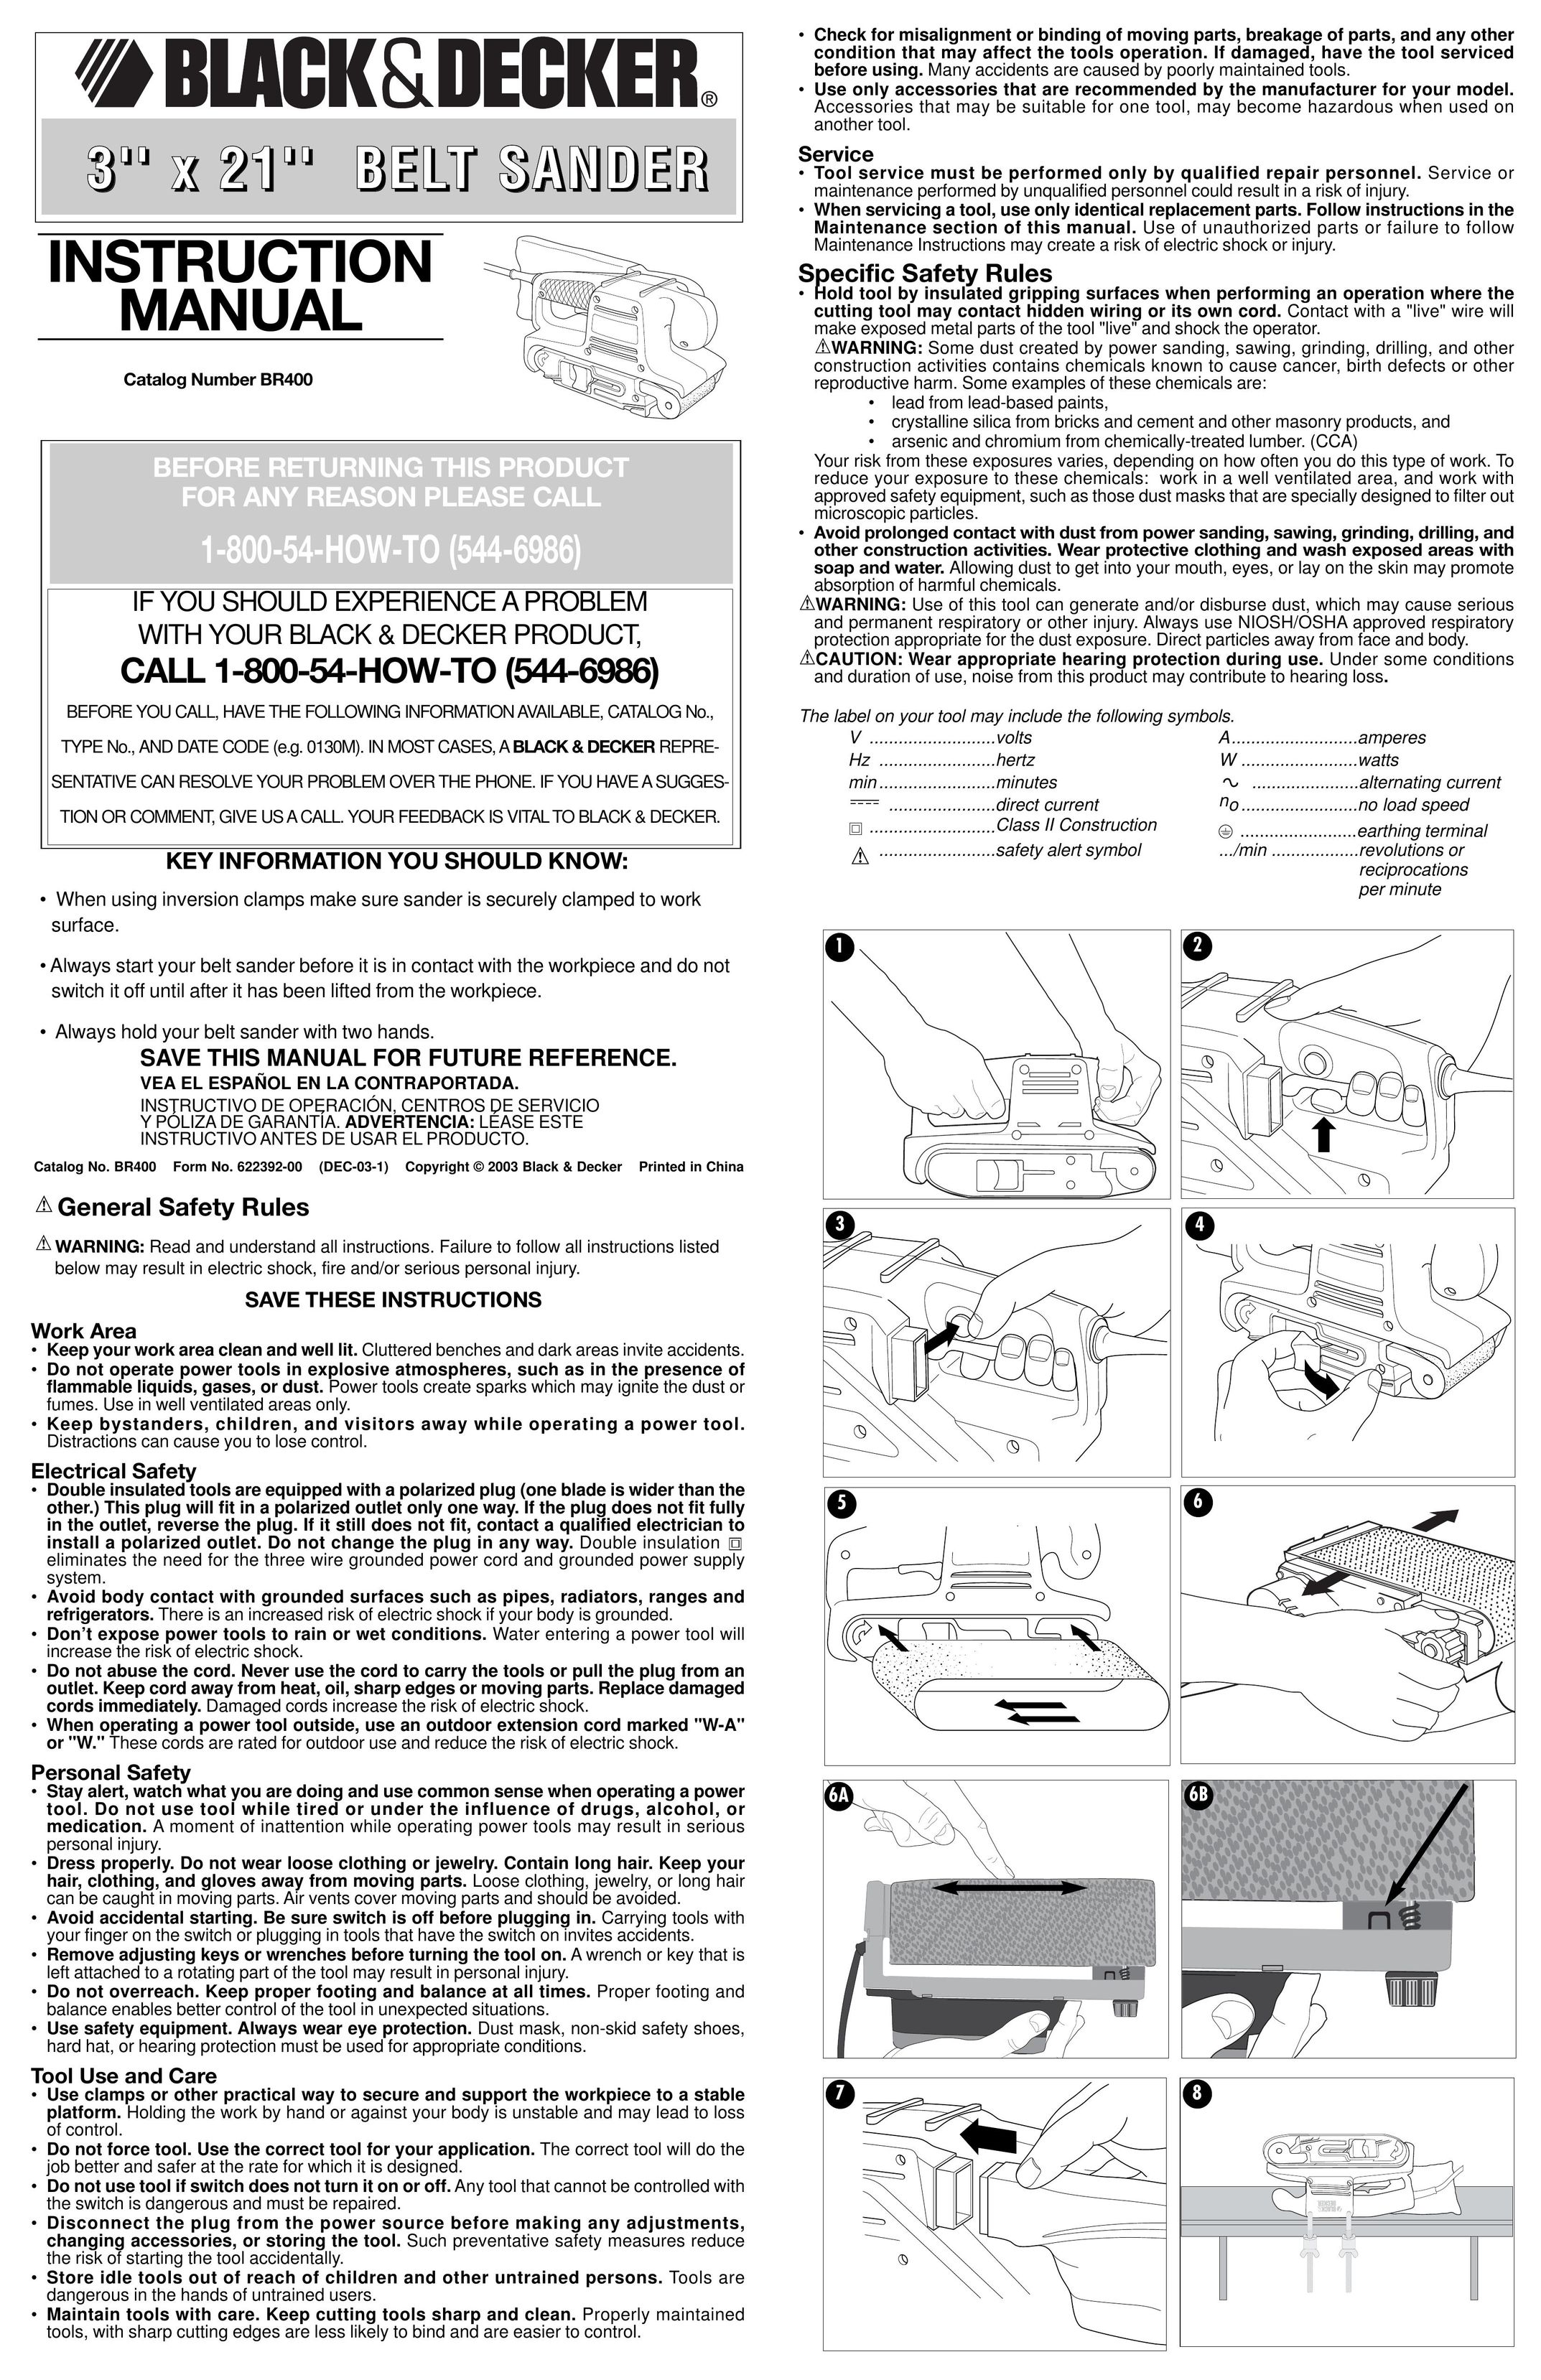 Black & Decker 622392-00 Sander User Manual